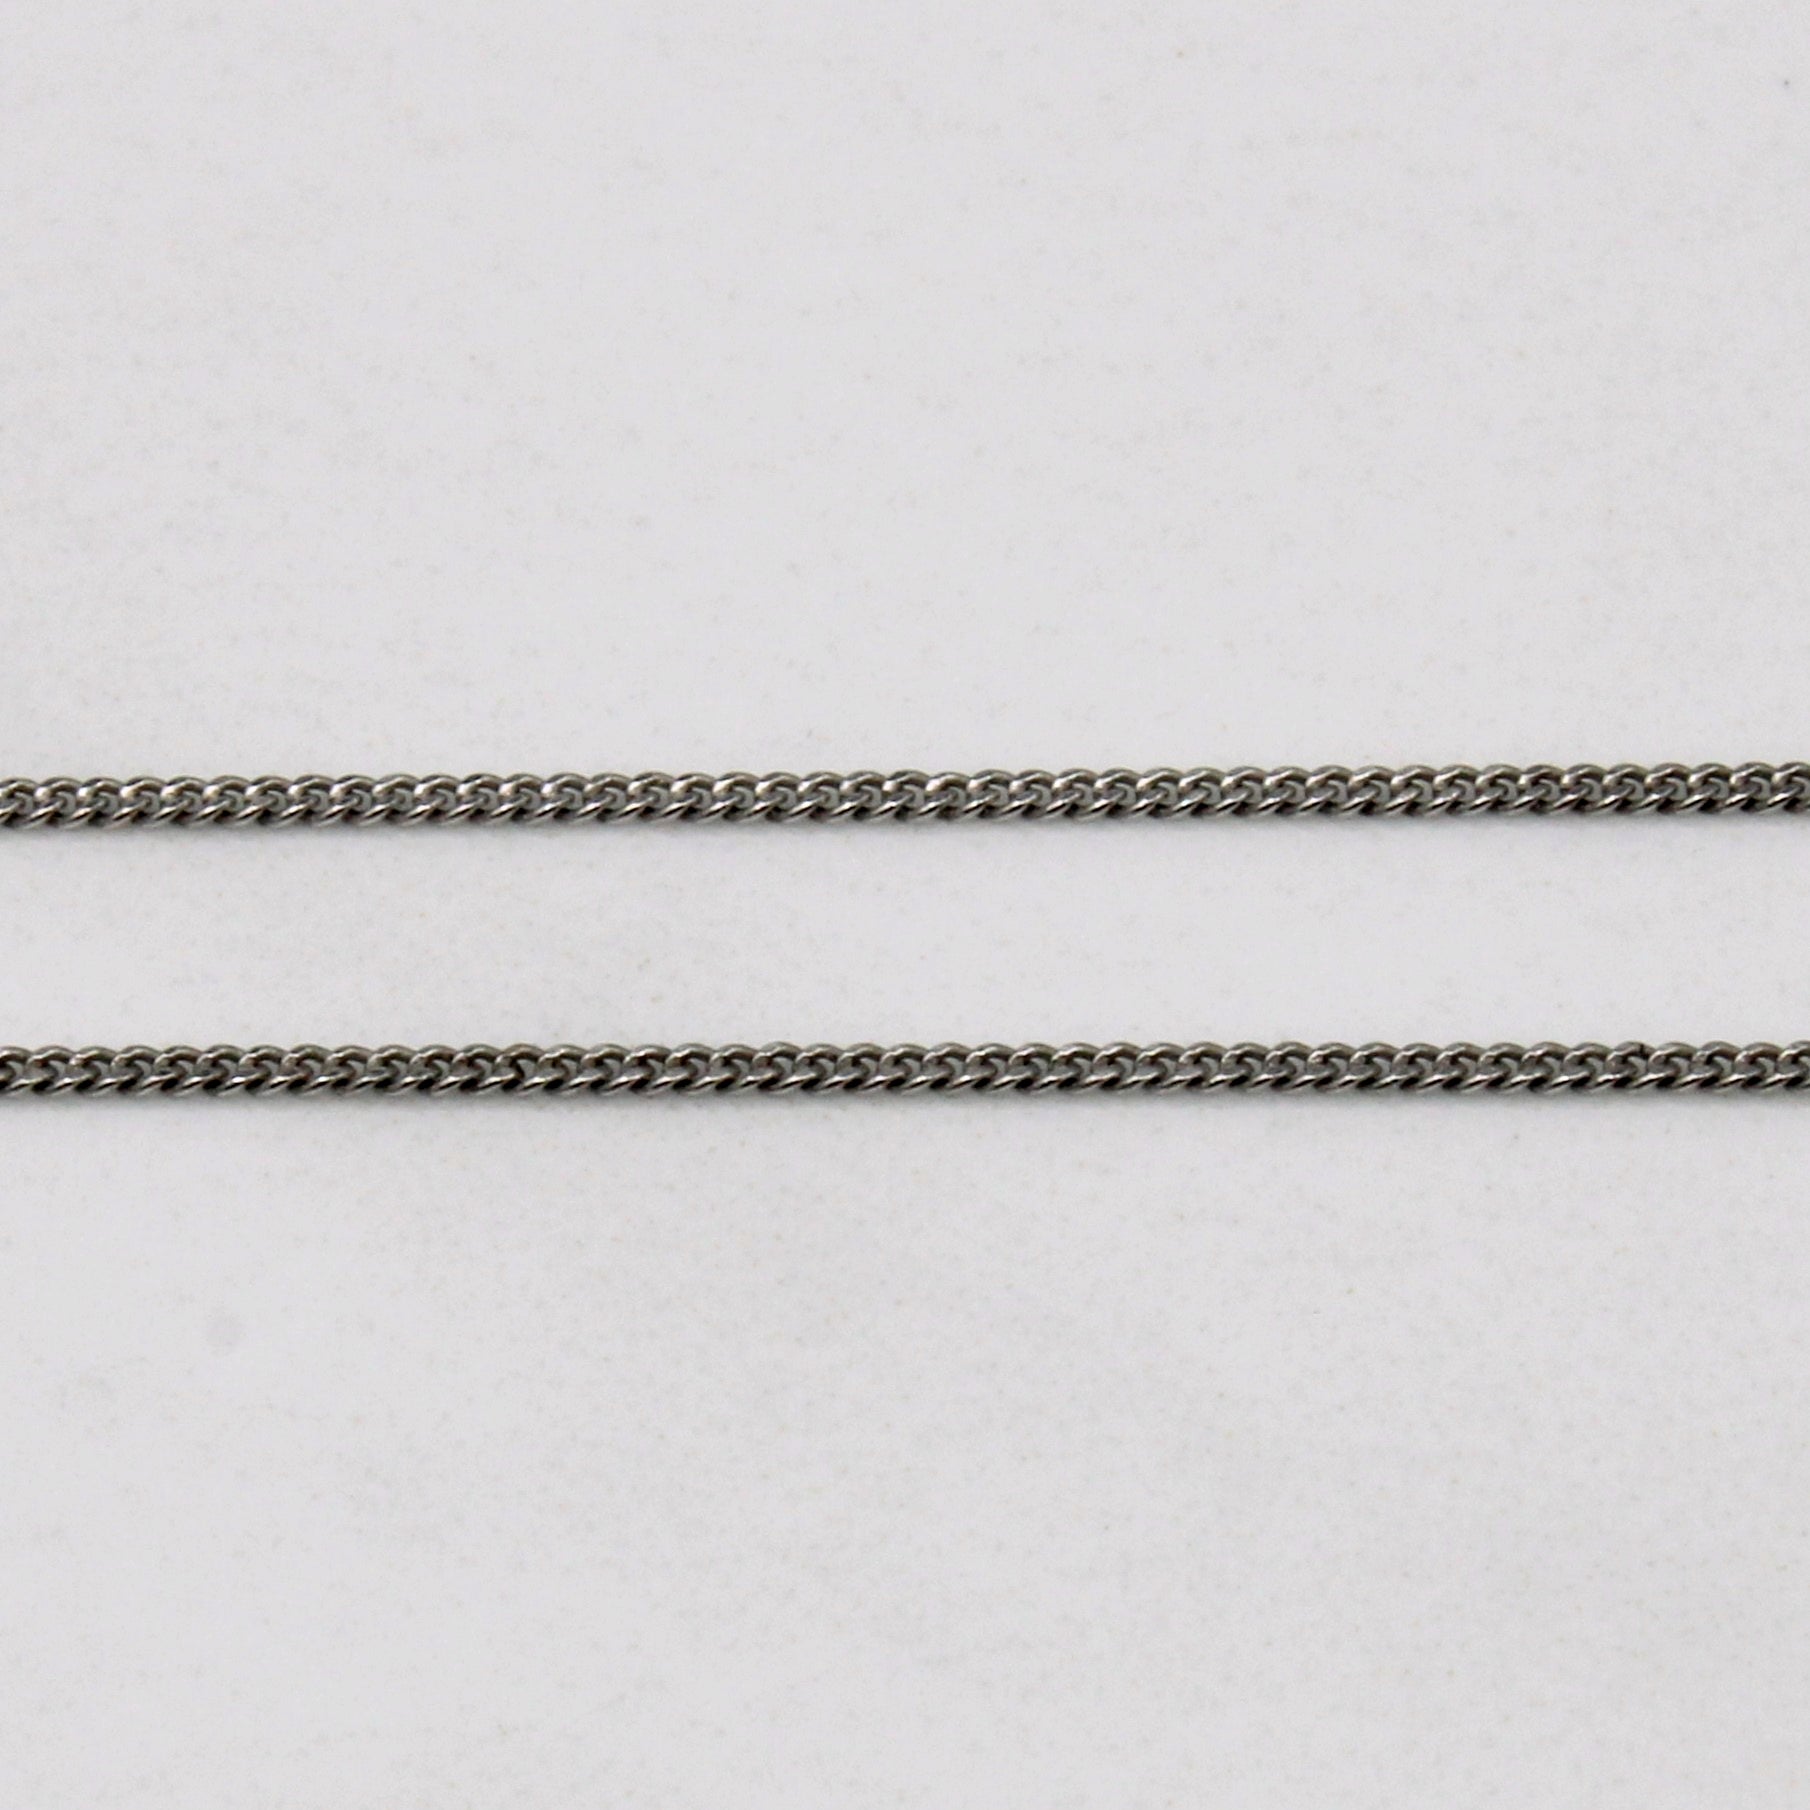 Diamond Pendant & Necklace | 0.15ct | 17